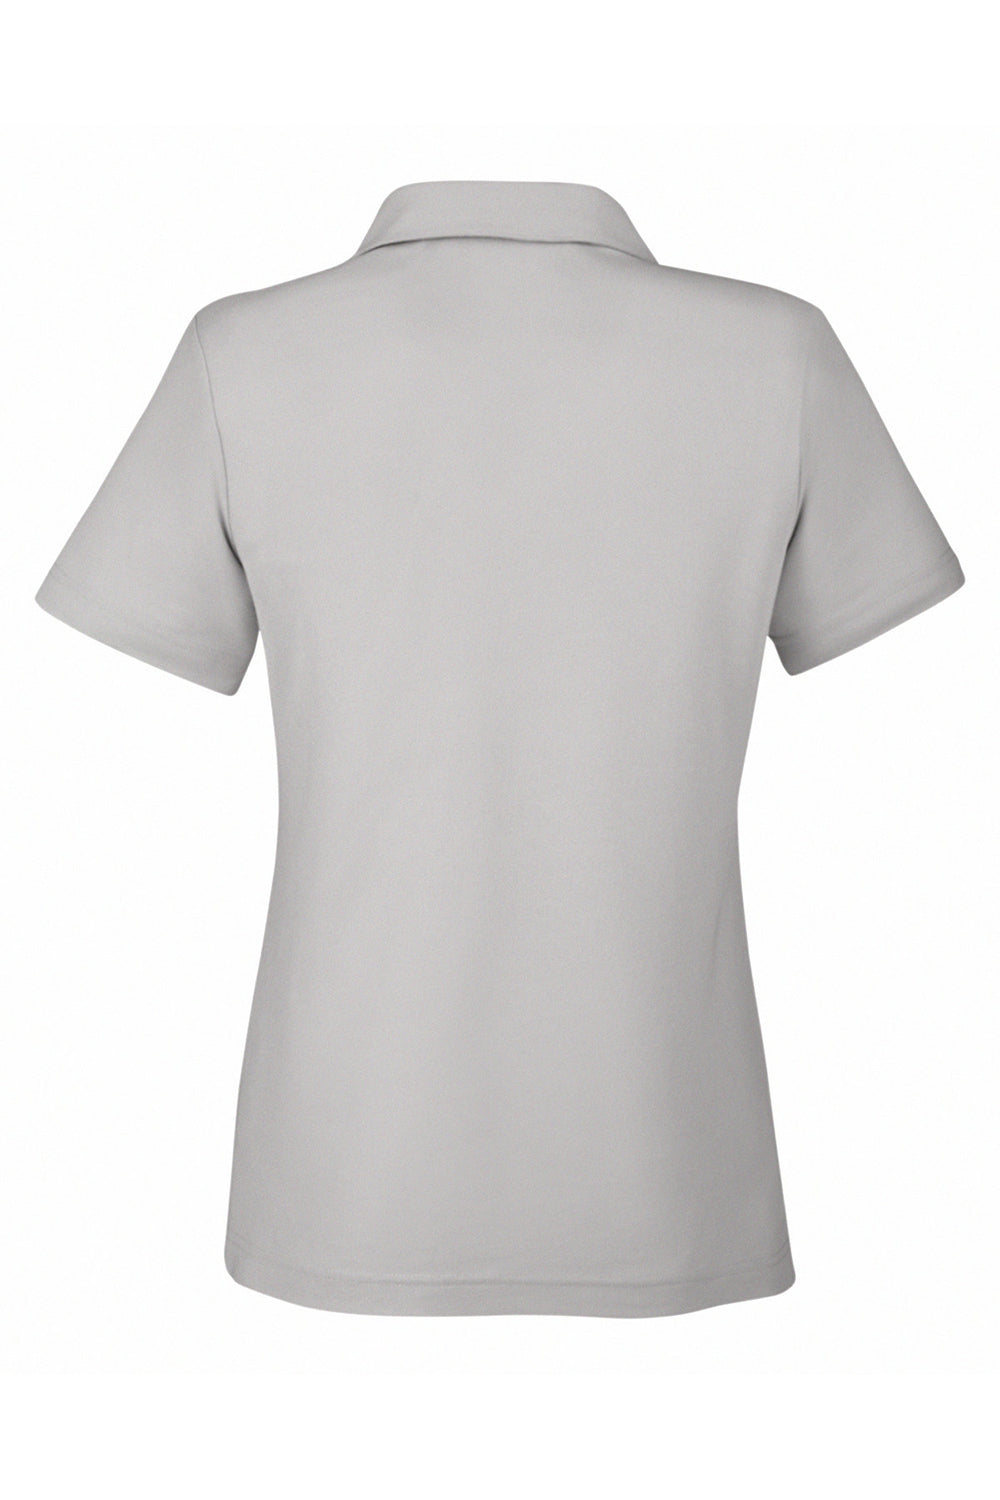 Core 365 CE112W Womens Fusion ChromaSoft Performance Moisture Wicking Pique Short Sleeve Polo Shirt Platinum Grey Flat Back